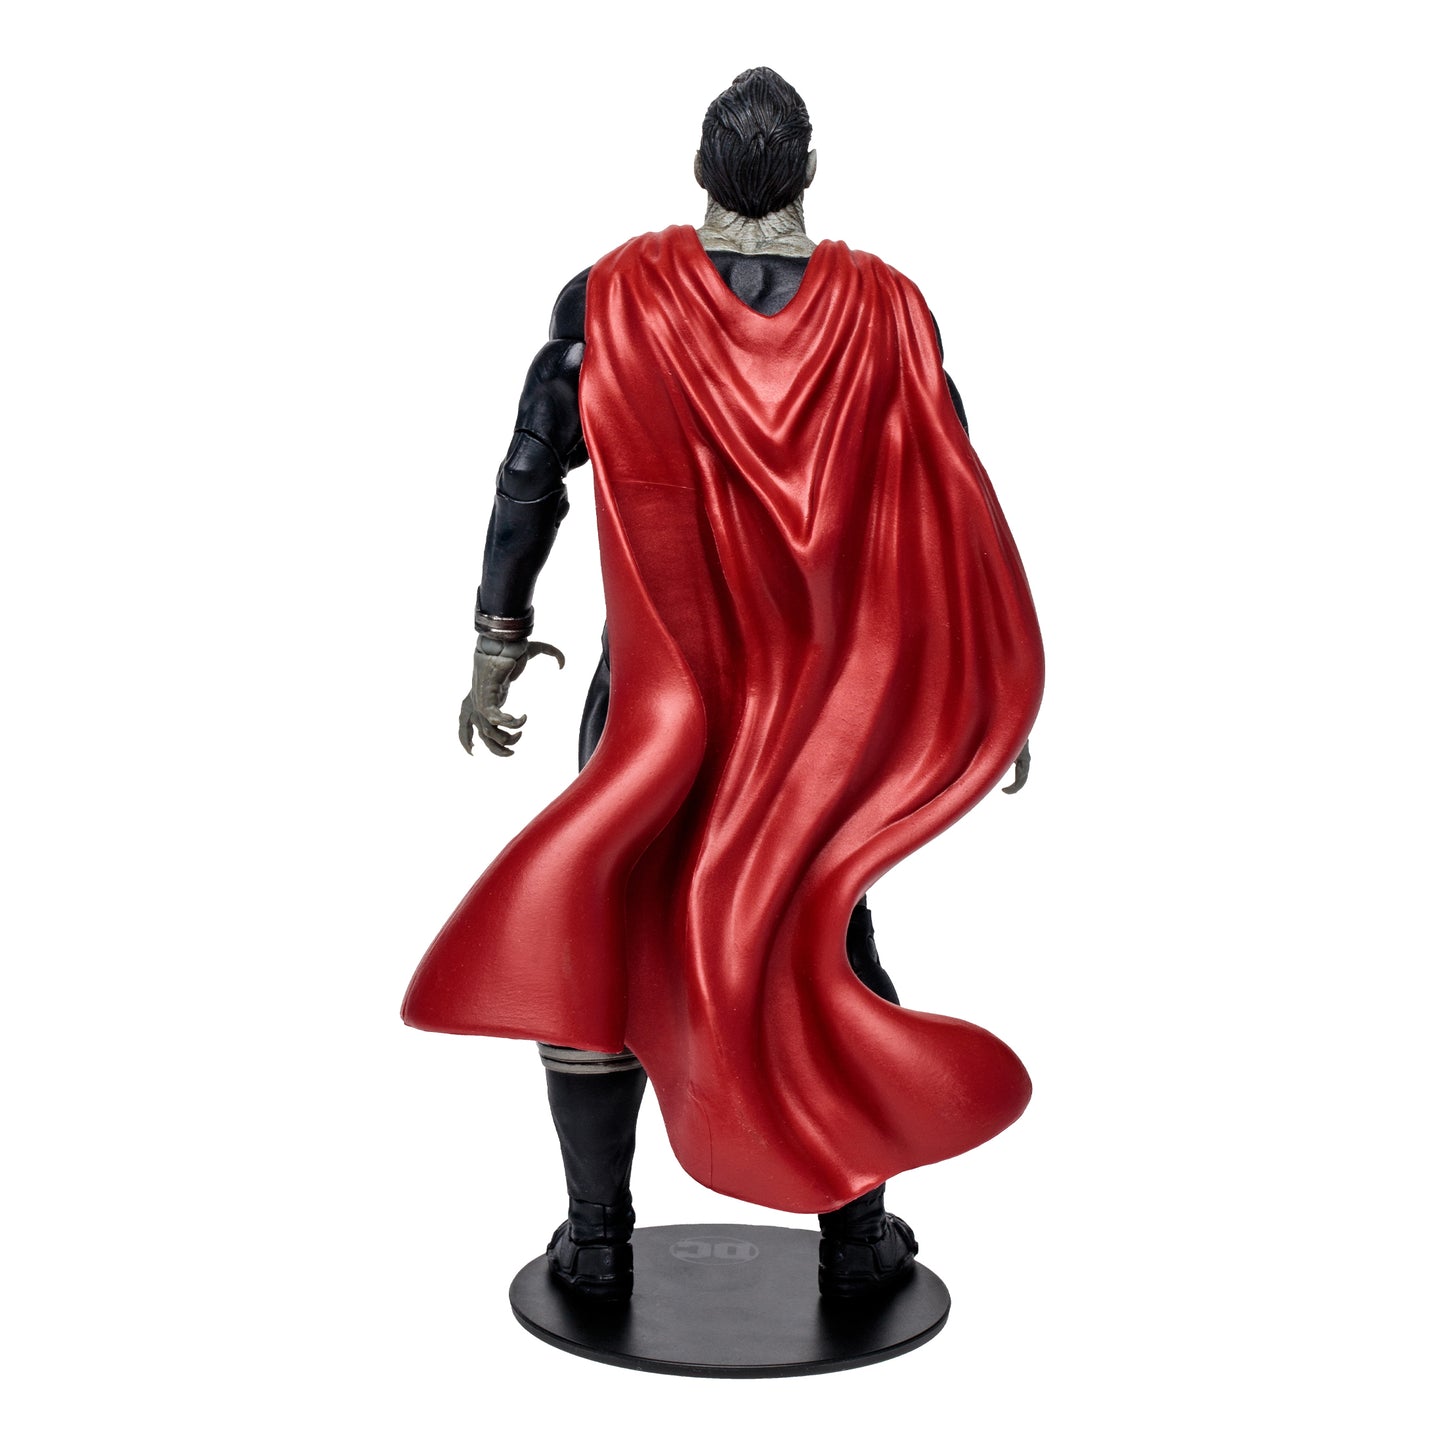 DC Multiverse Vampire Superman (DC vs.Vampires) Gold Label 7-Inch Action Figure back pose - Heretoserveyou